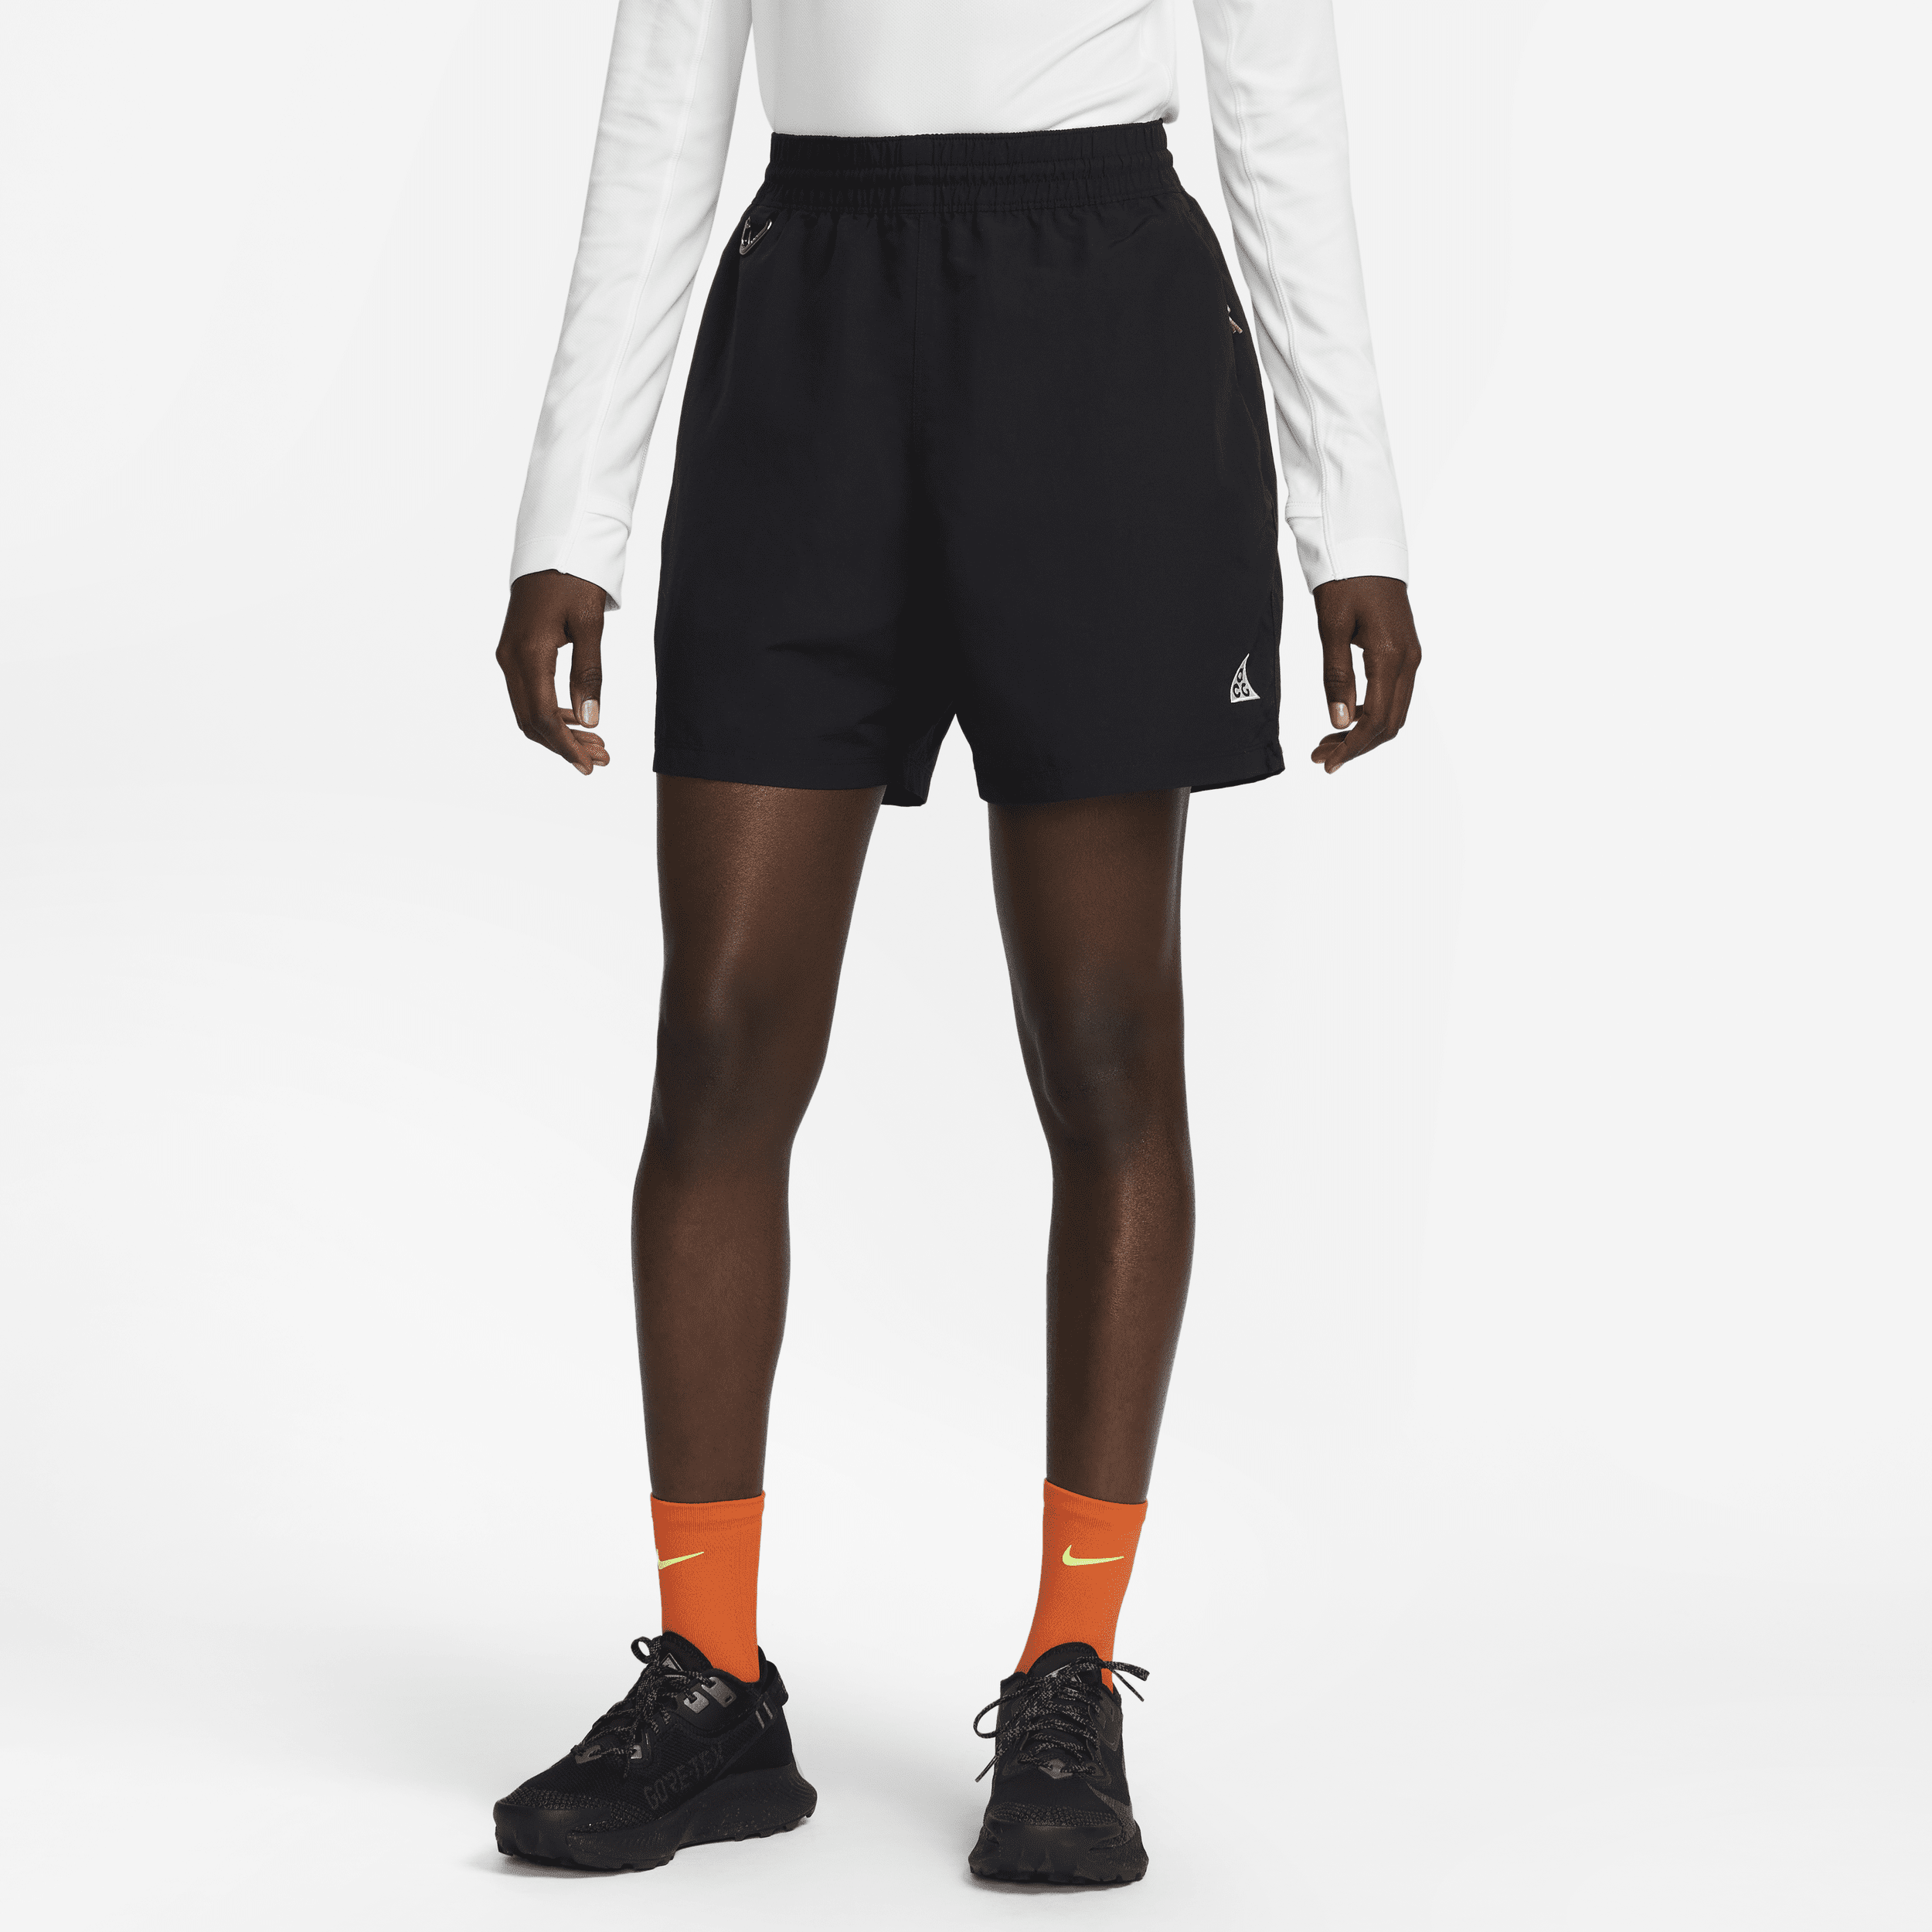 Nike ACG-shorts (13 cm) til kvinder - sort